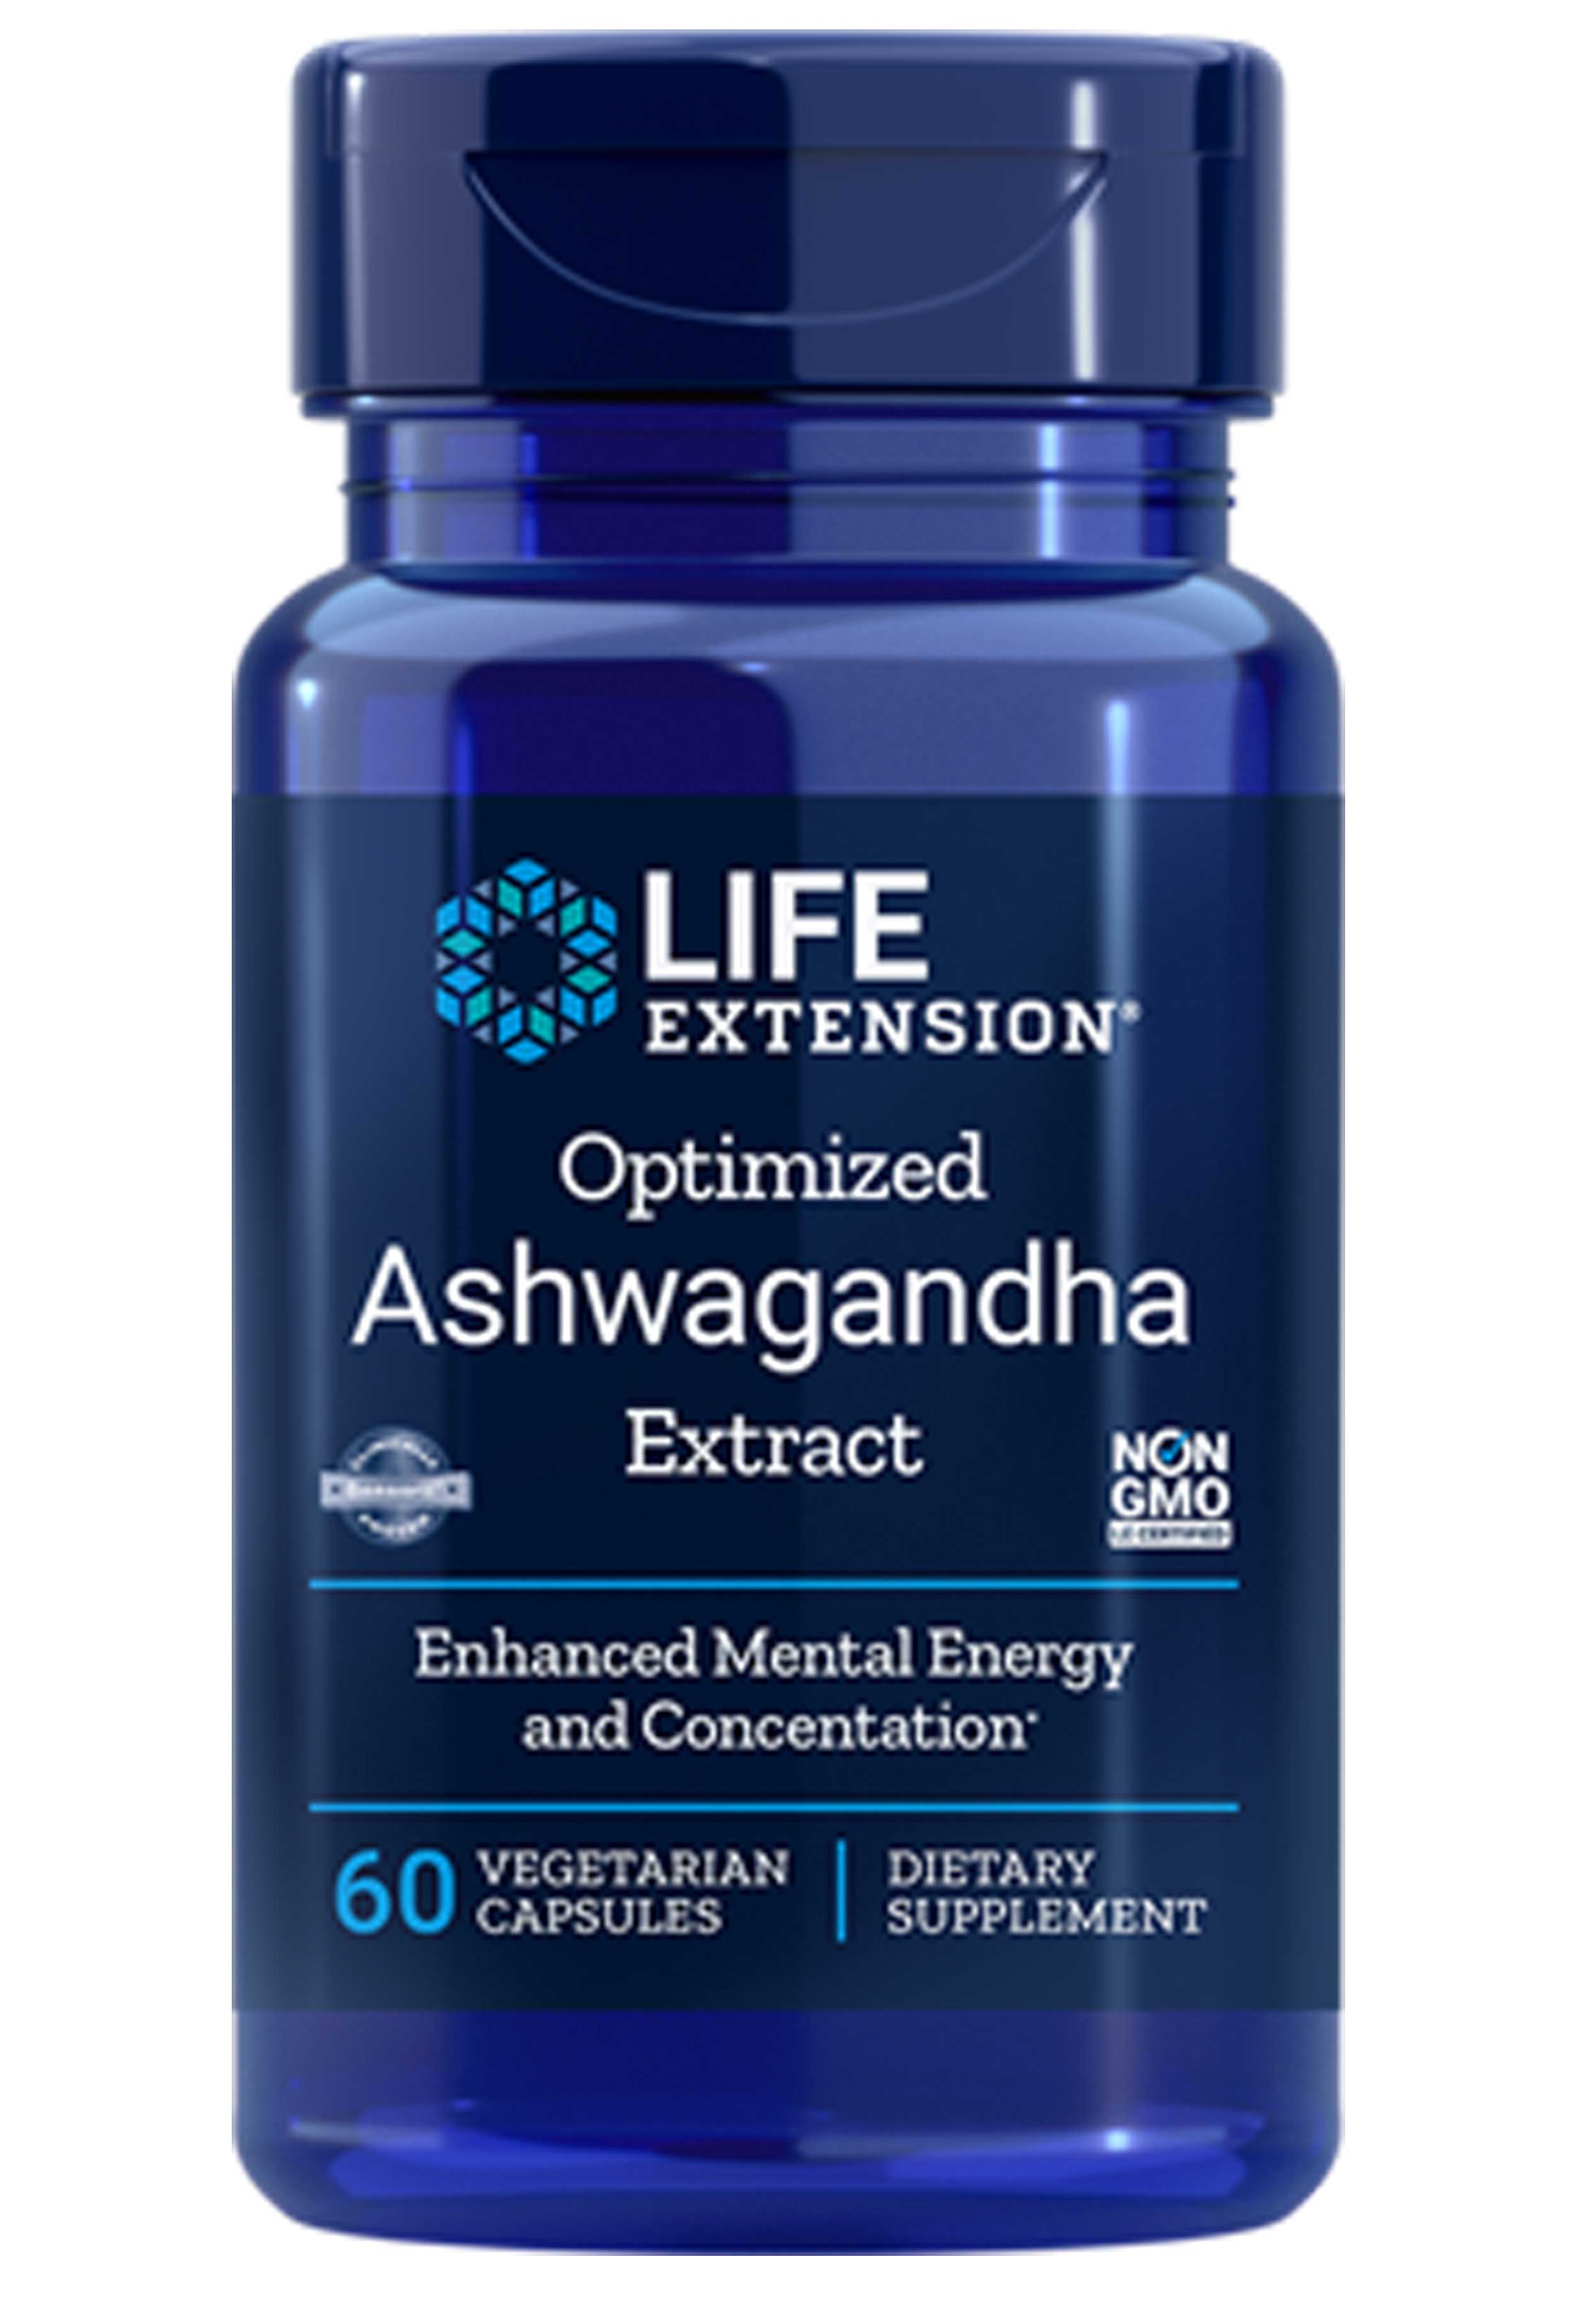 Life Extension Optimized Ashwagandha Extract